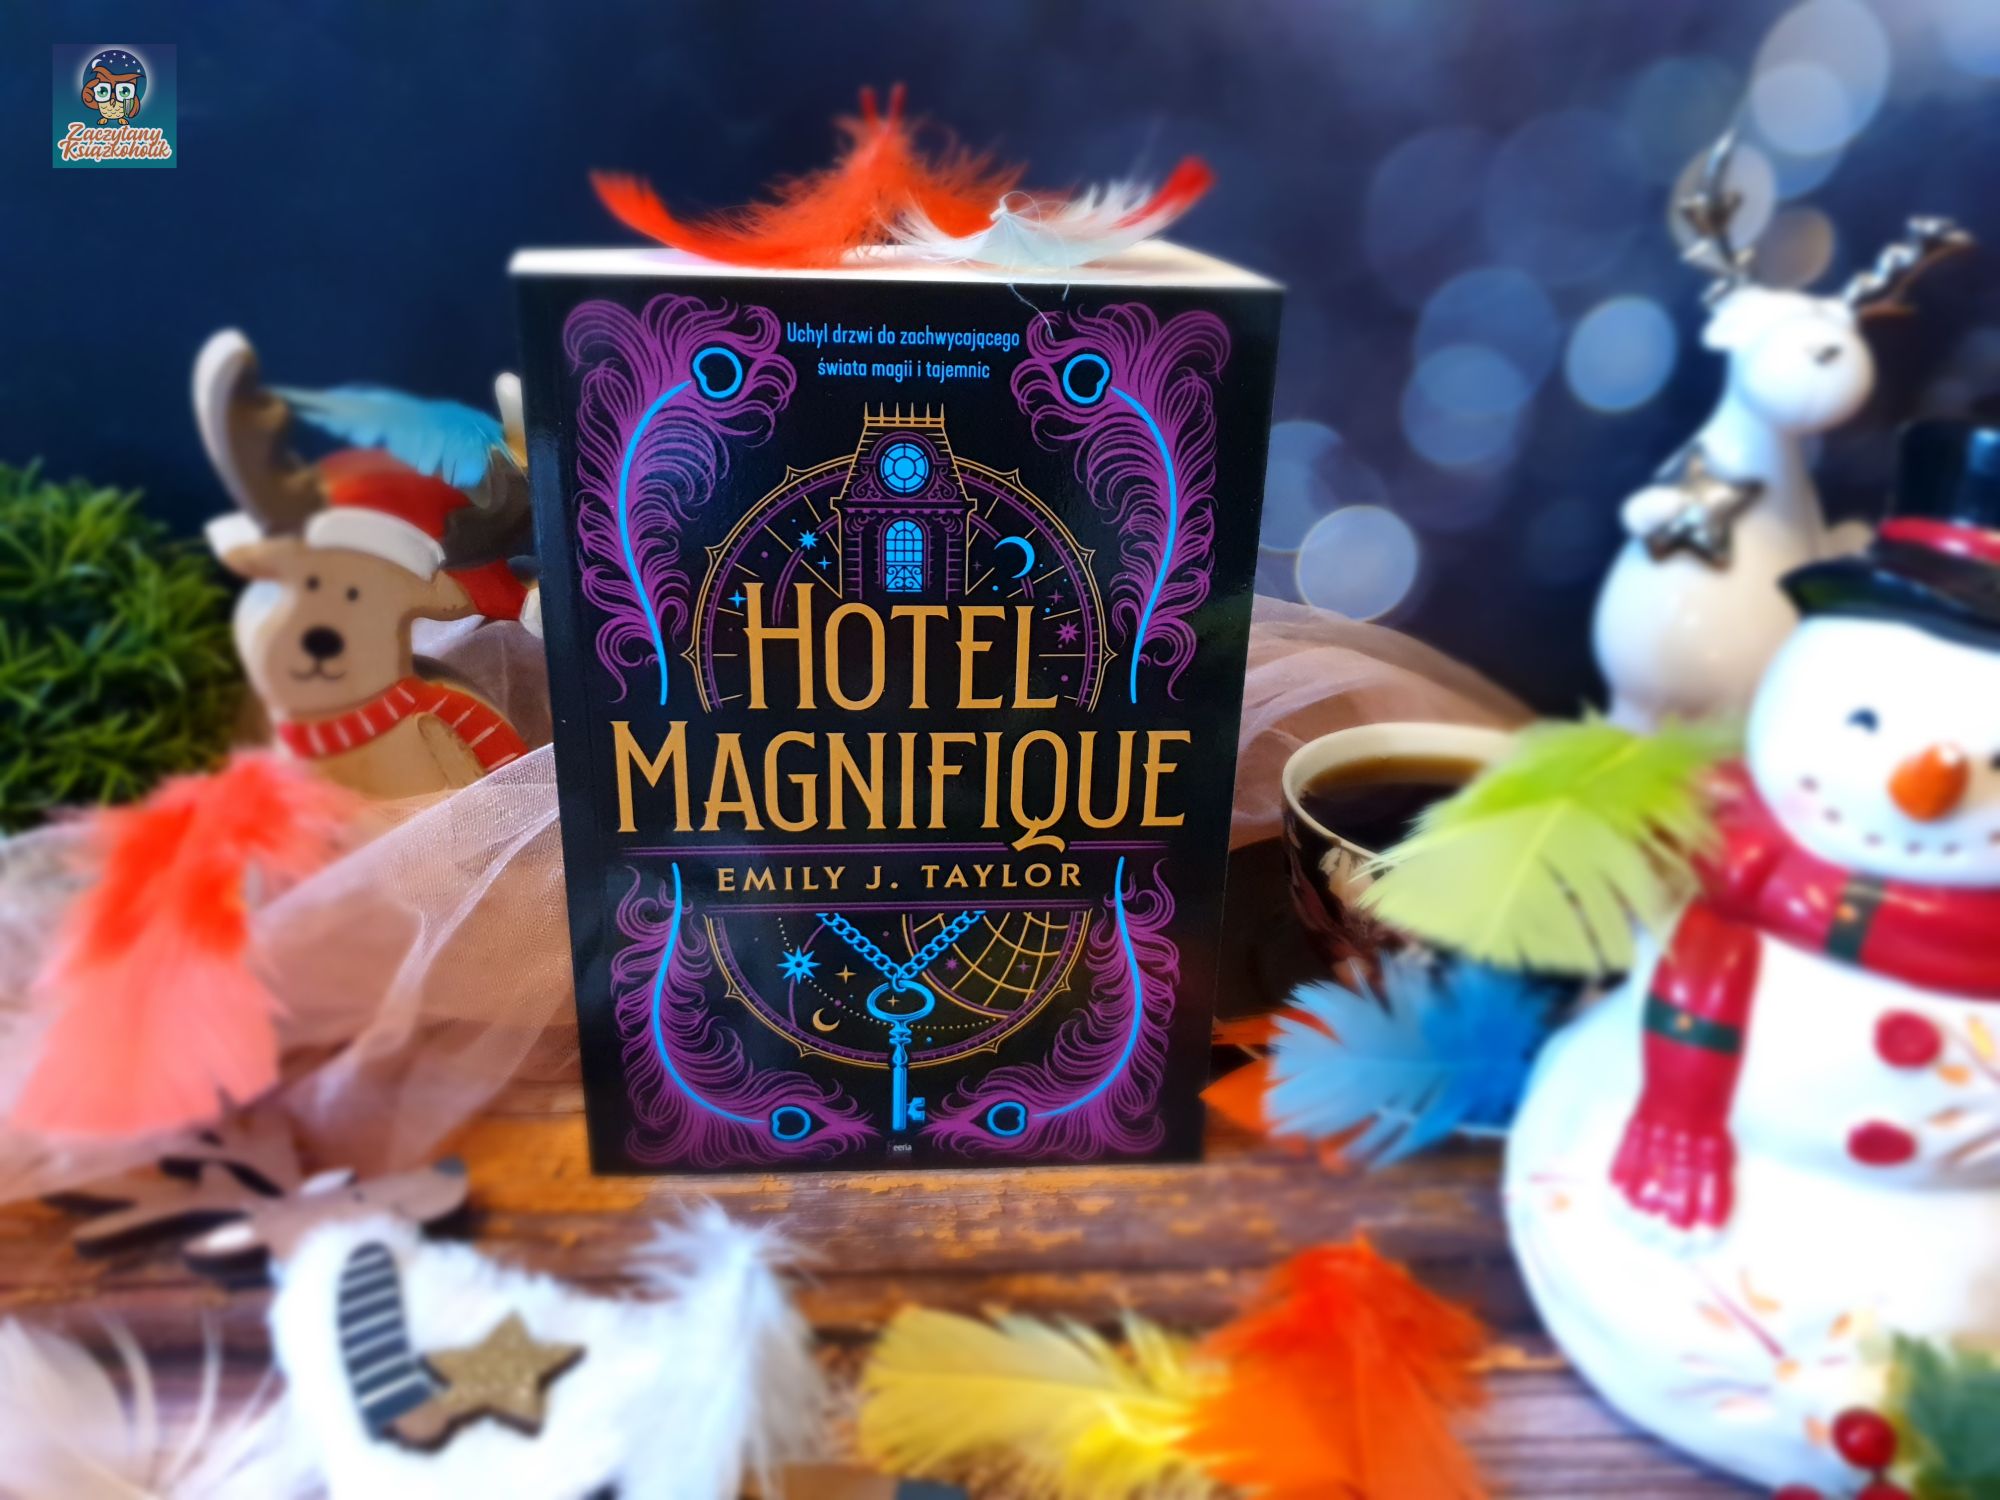 Hotel Magnifique - Emily J. Taylor - zaczytanyksiazkoholik.pl - blog